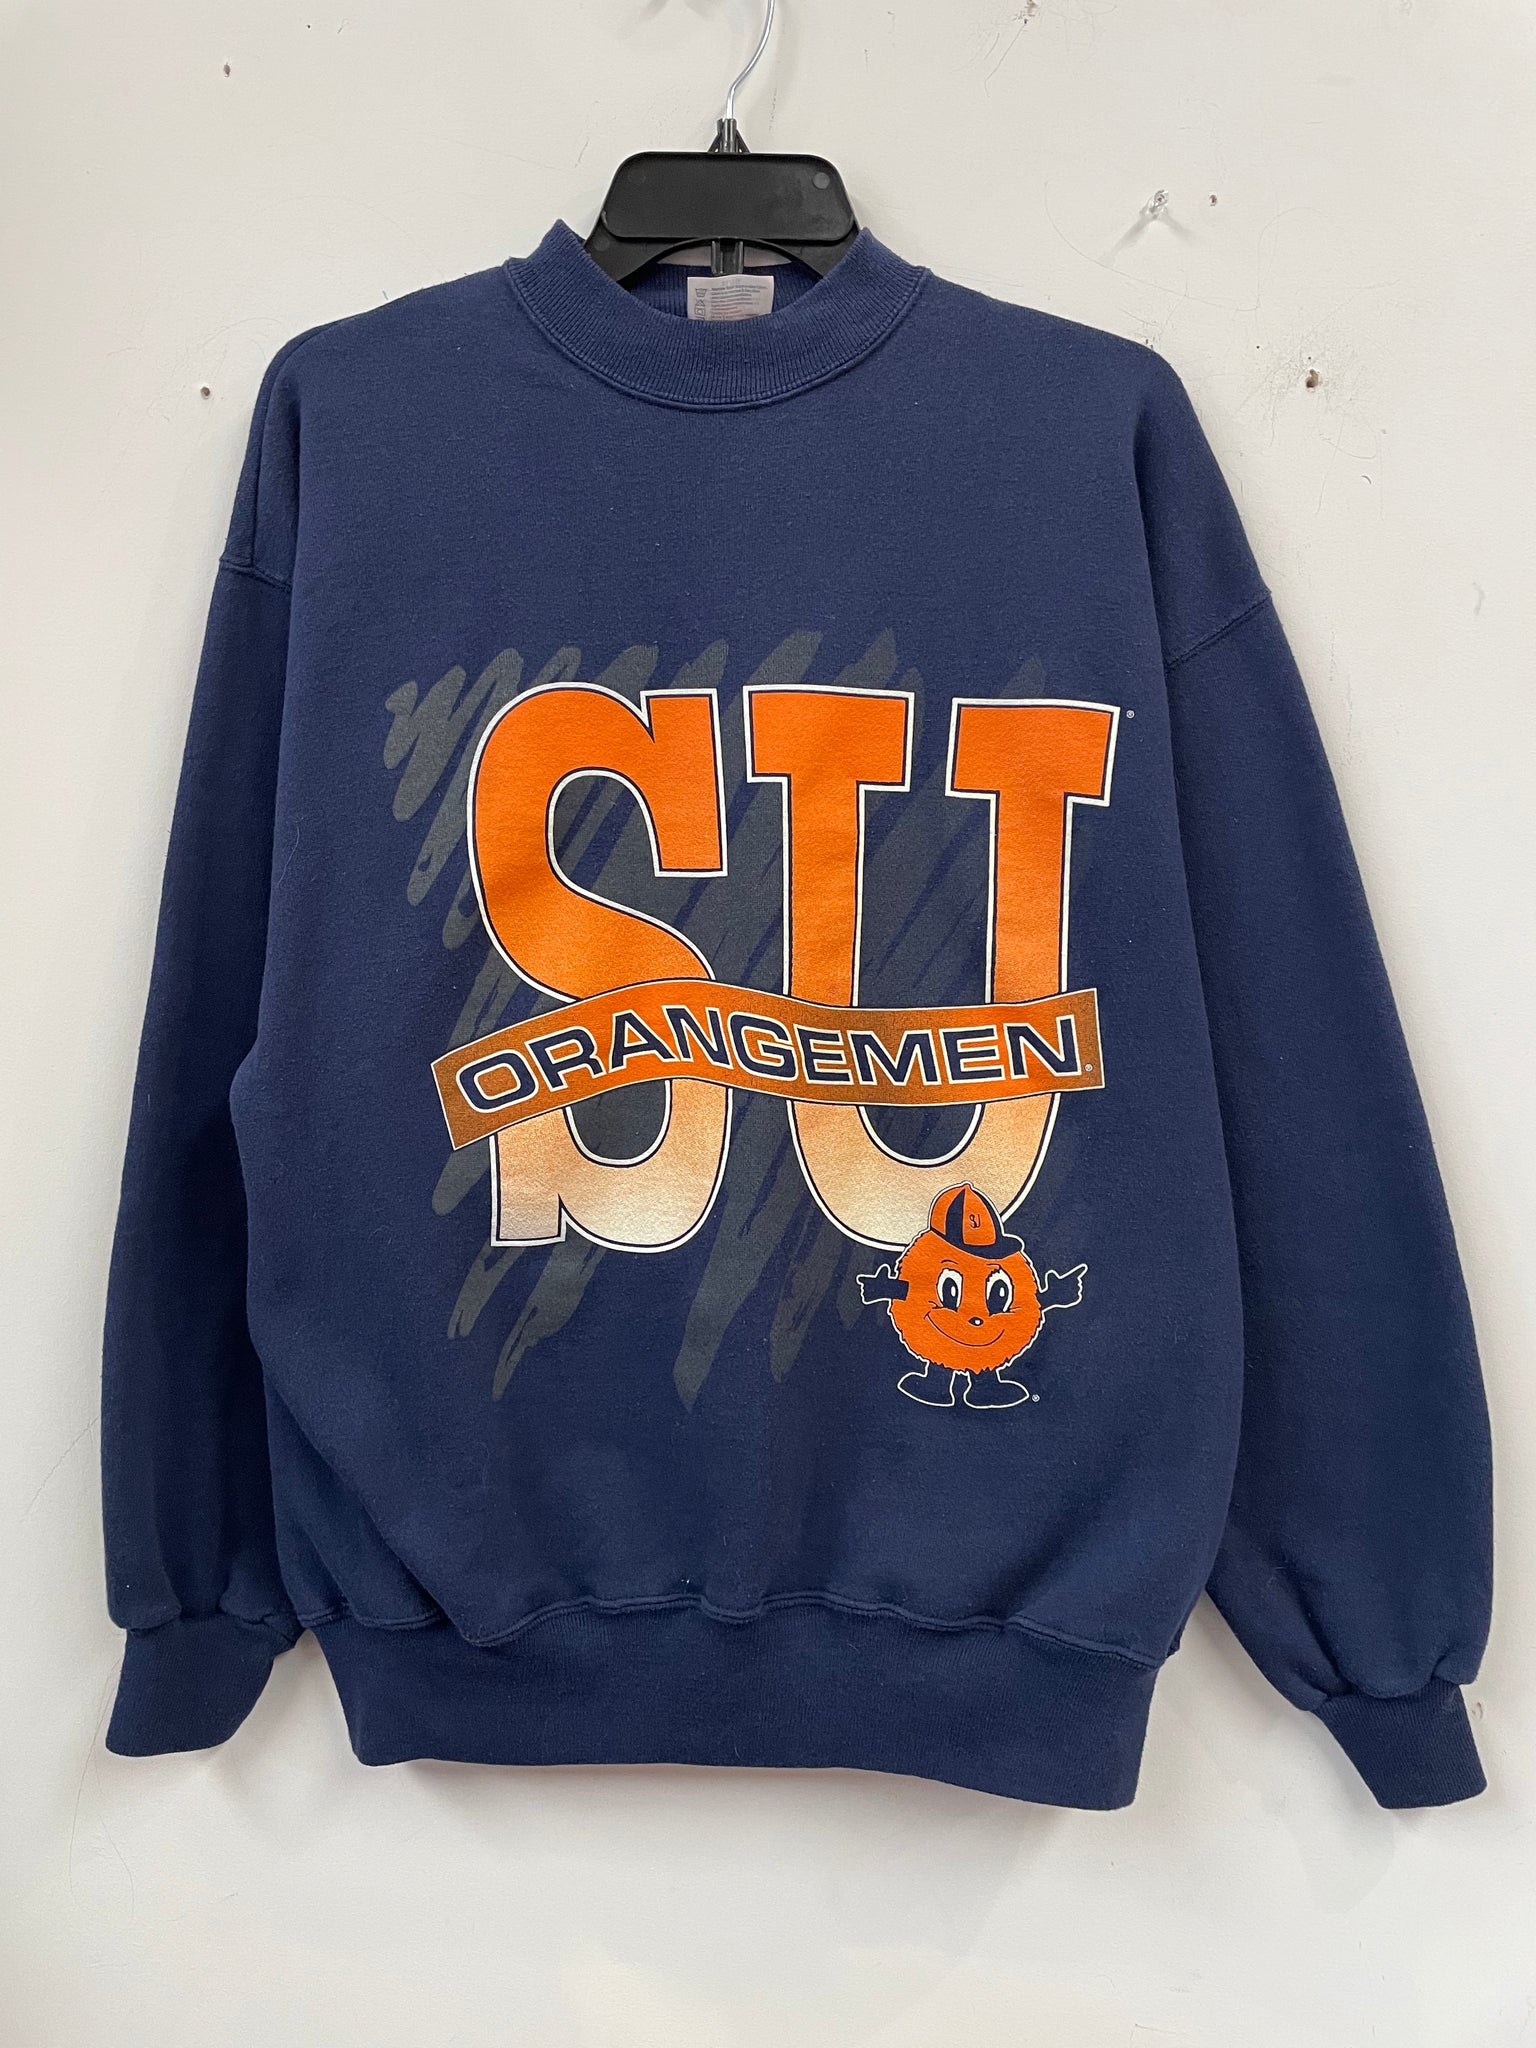 Vintage Syracuse Otto Syracuse Sweatshirt L/XL SS975